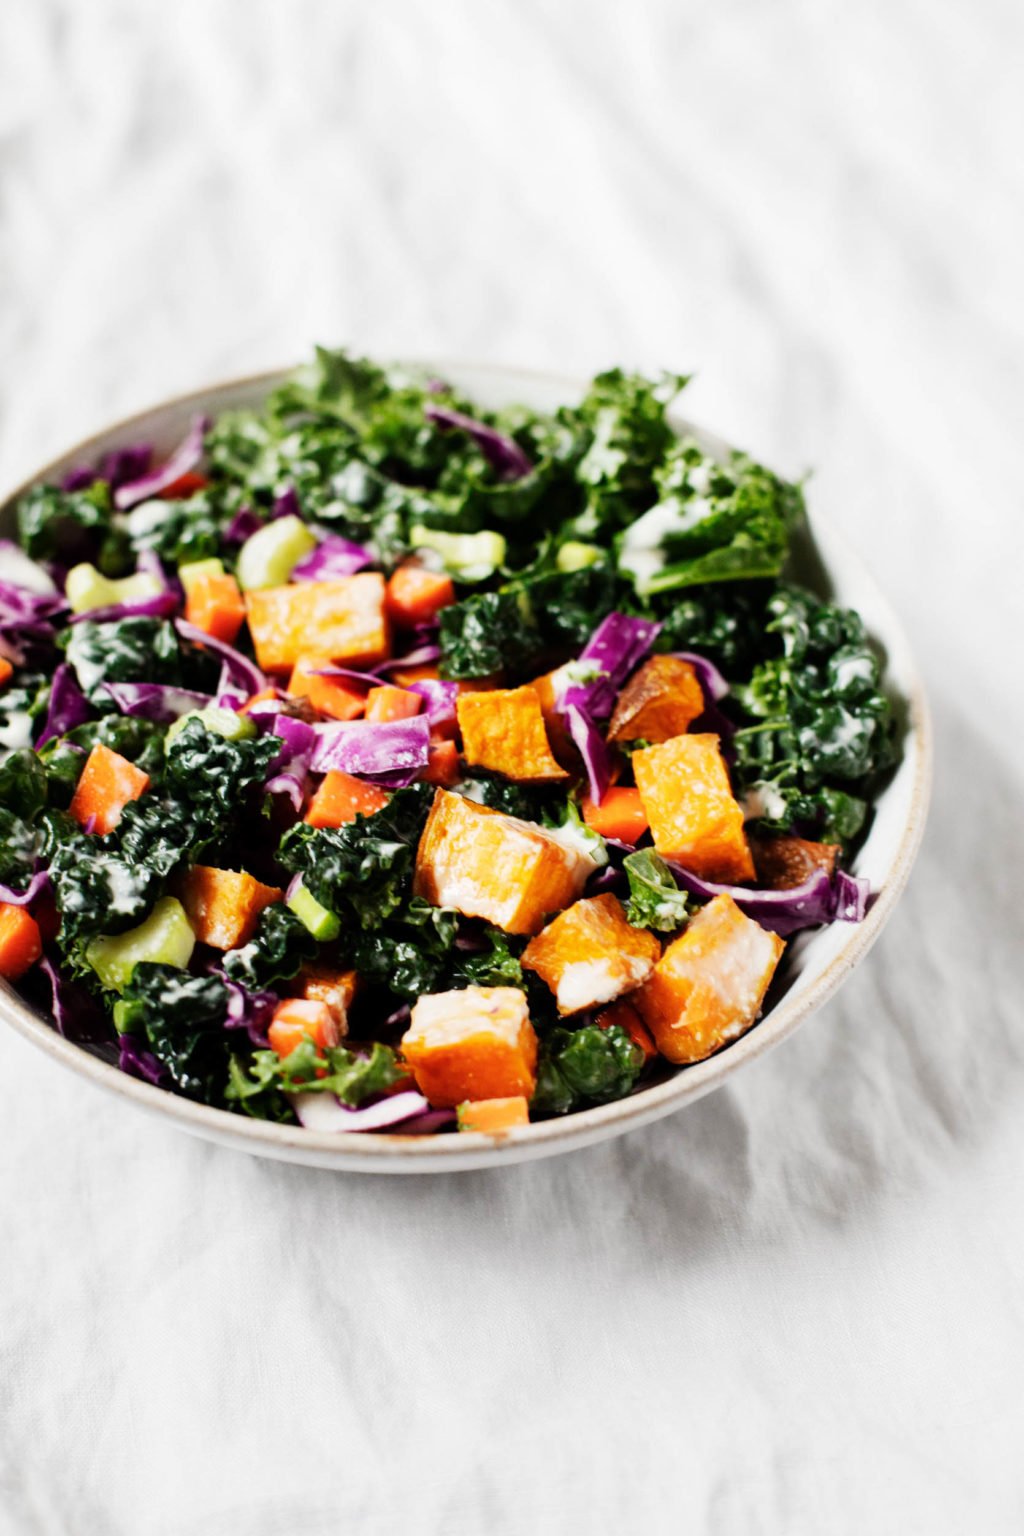 A serving bowl contains a colorful, plant-based kale salad.